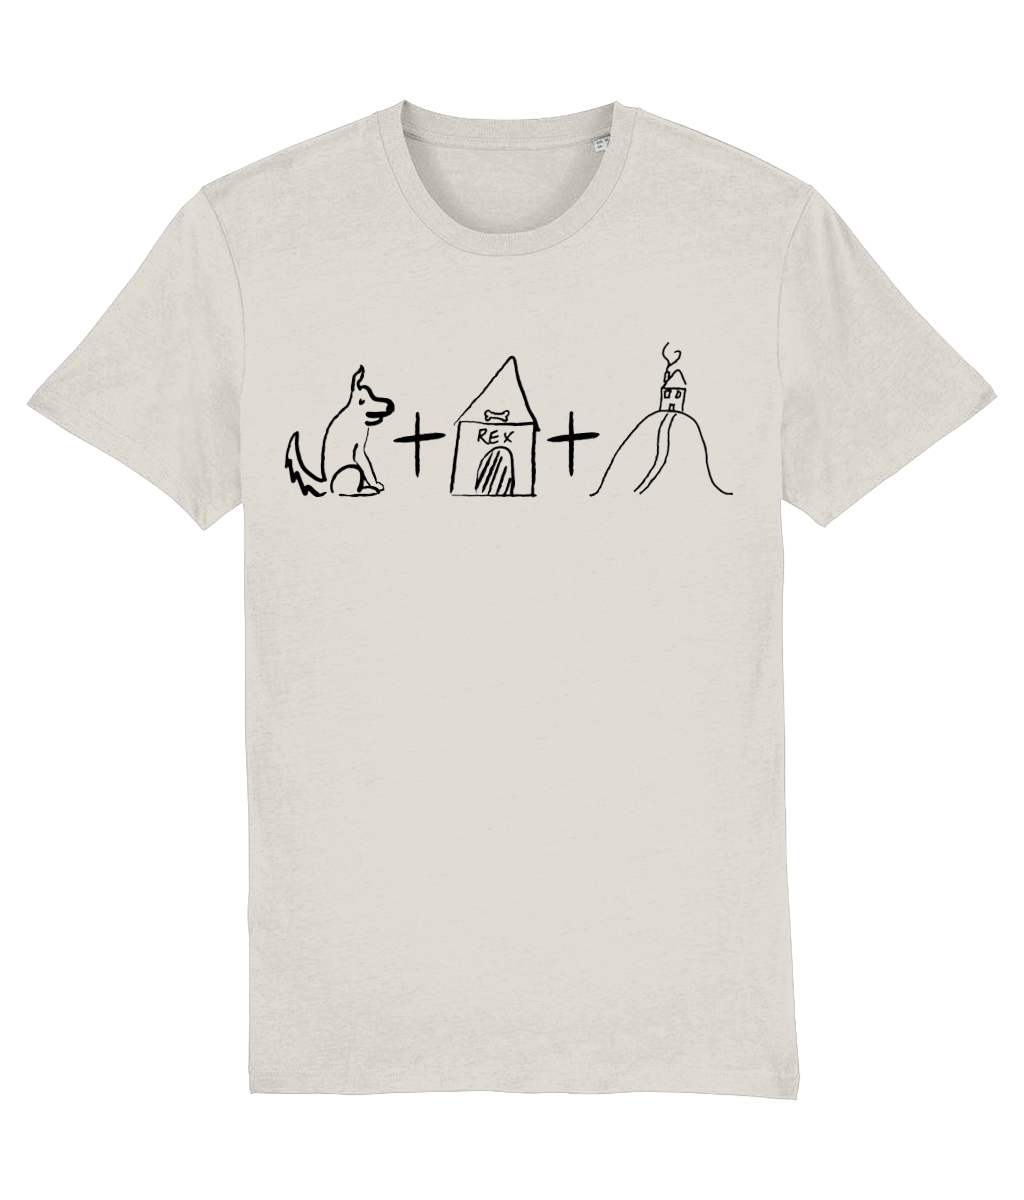 London Hieroglyphics (Variations) Unisex T-Shirt